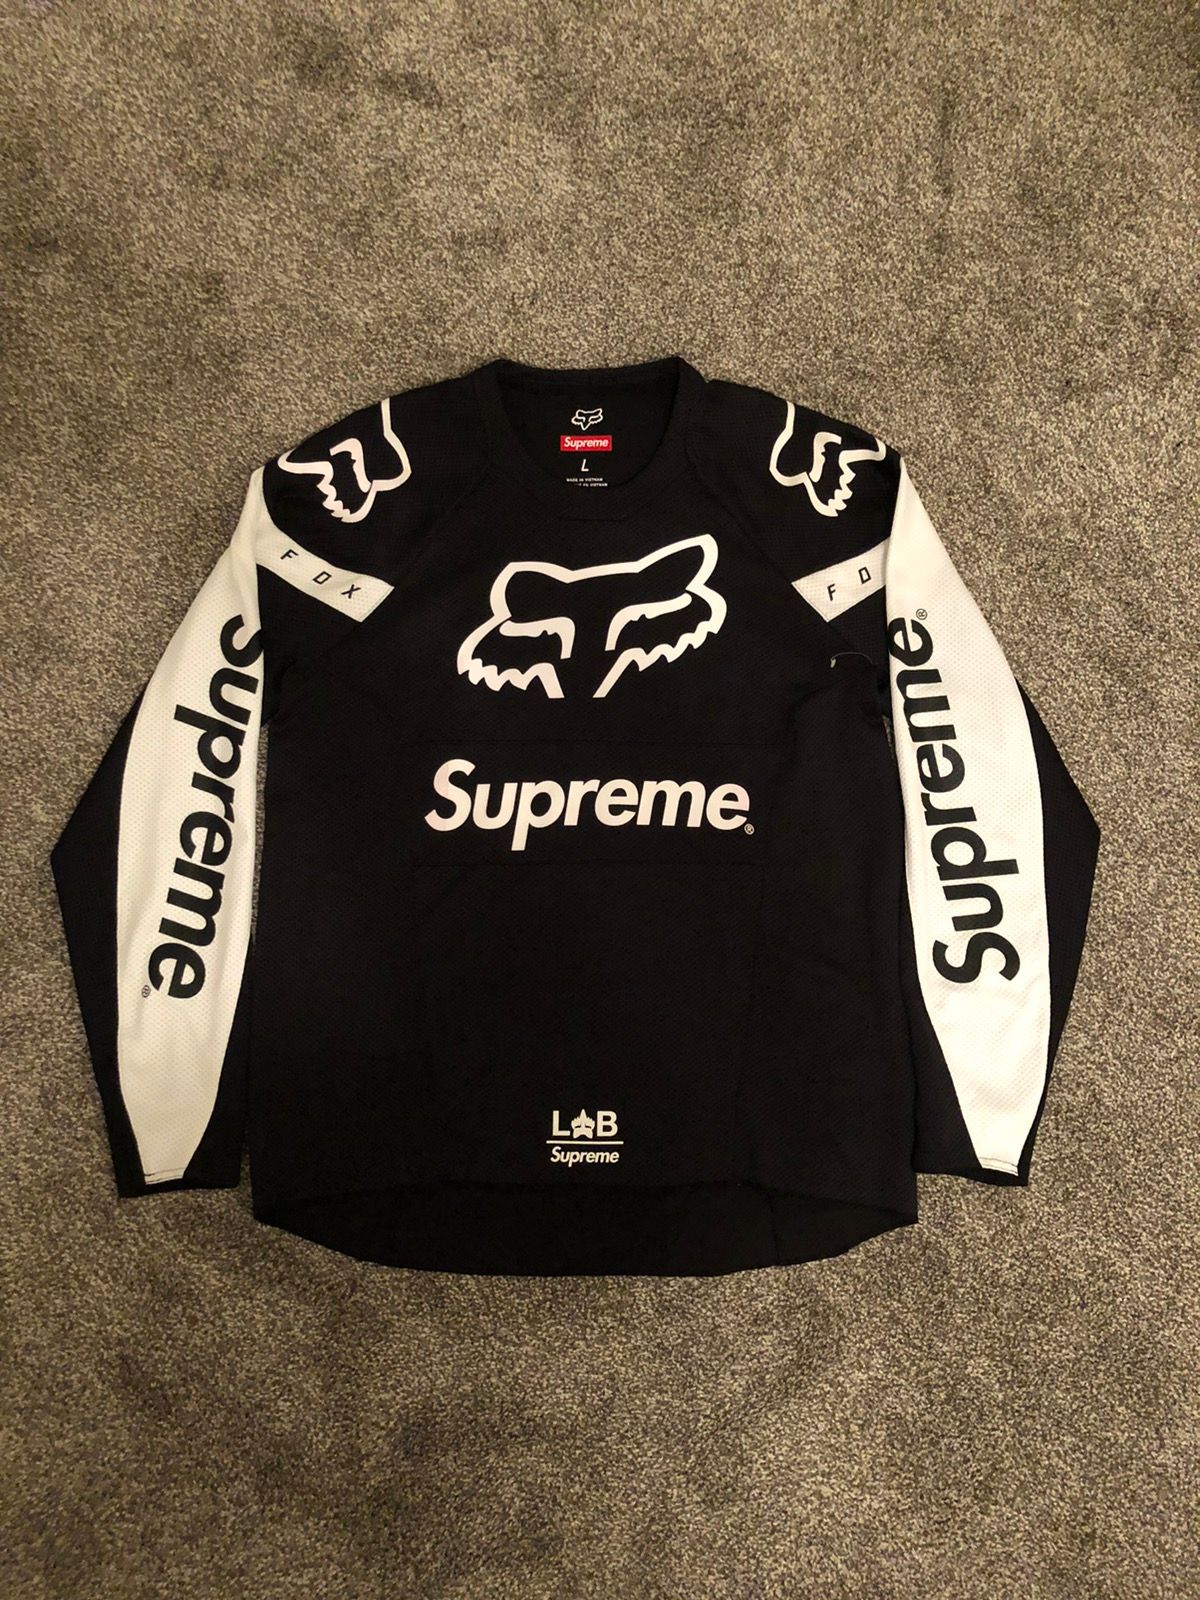 Supreme Supreme x Fox Racing Moto Jersey (L) | Grailed